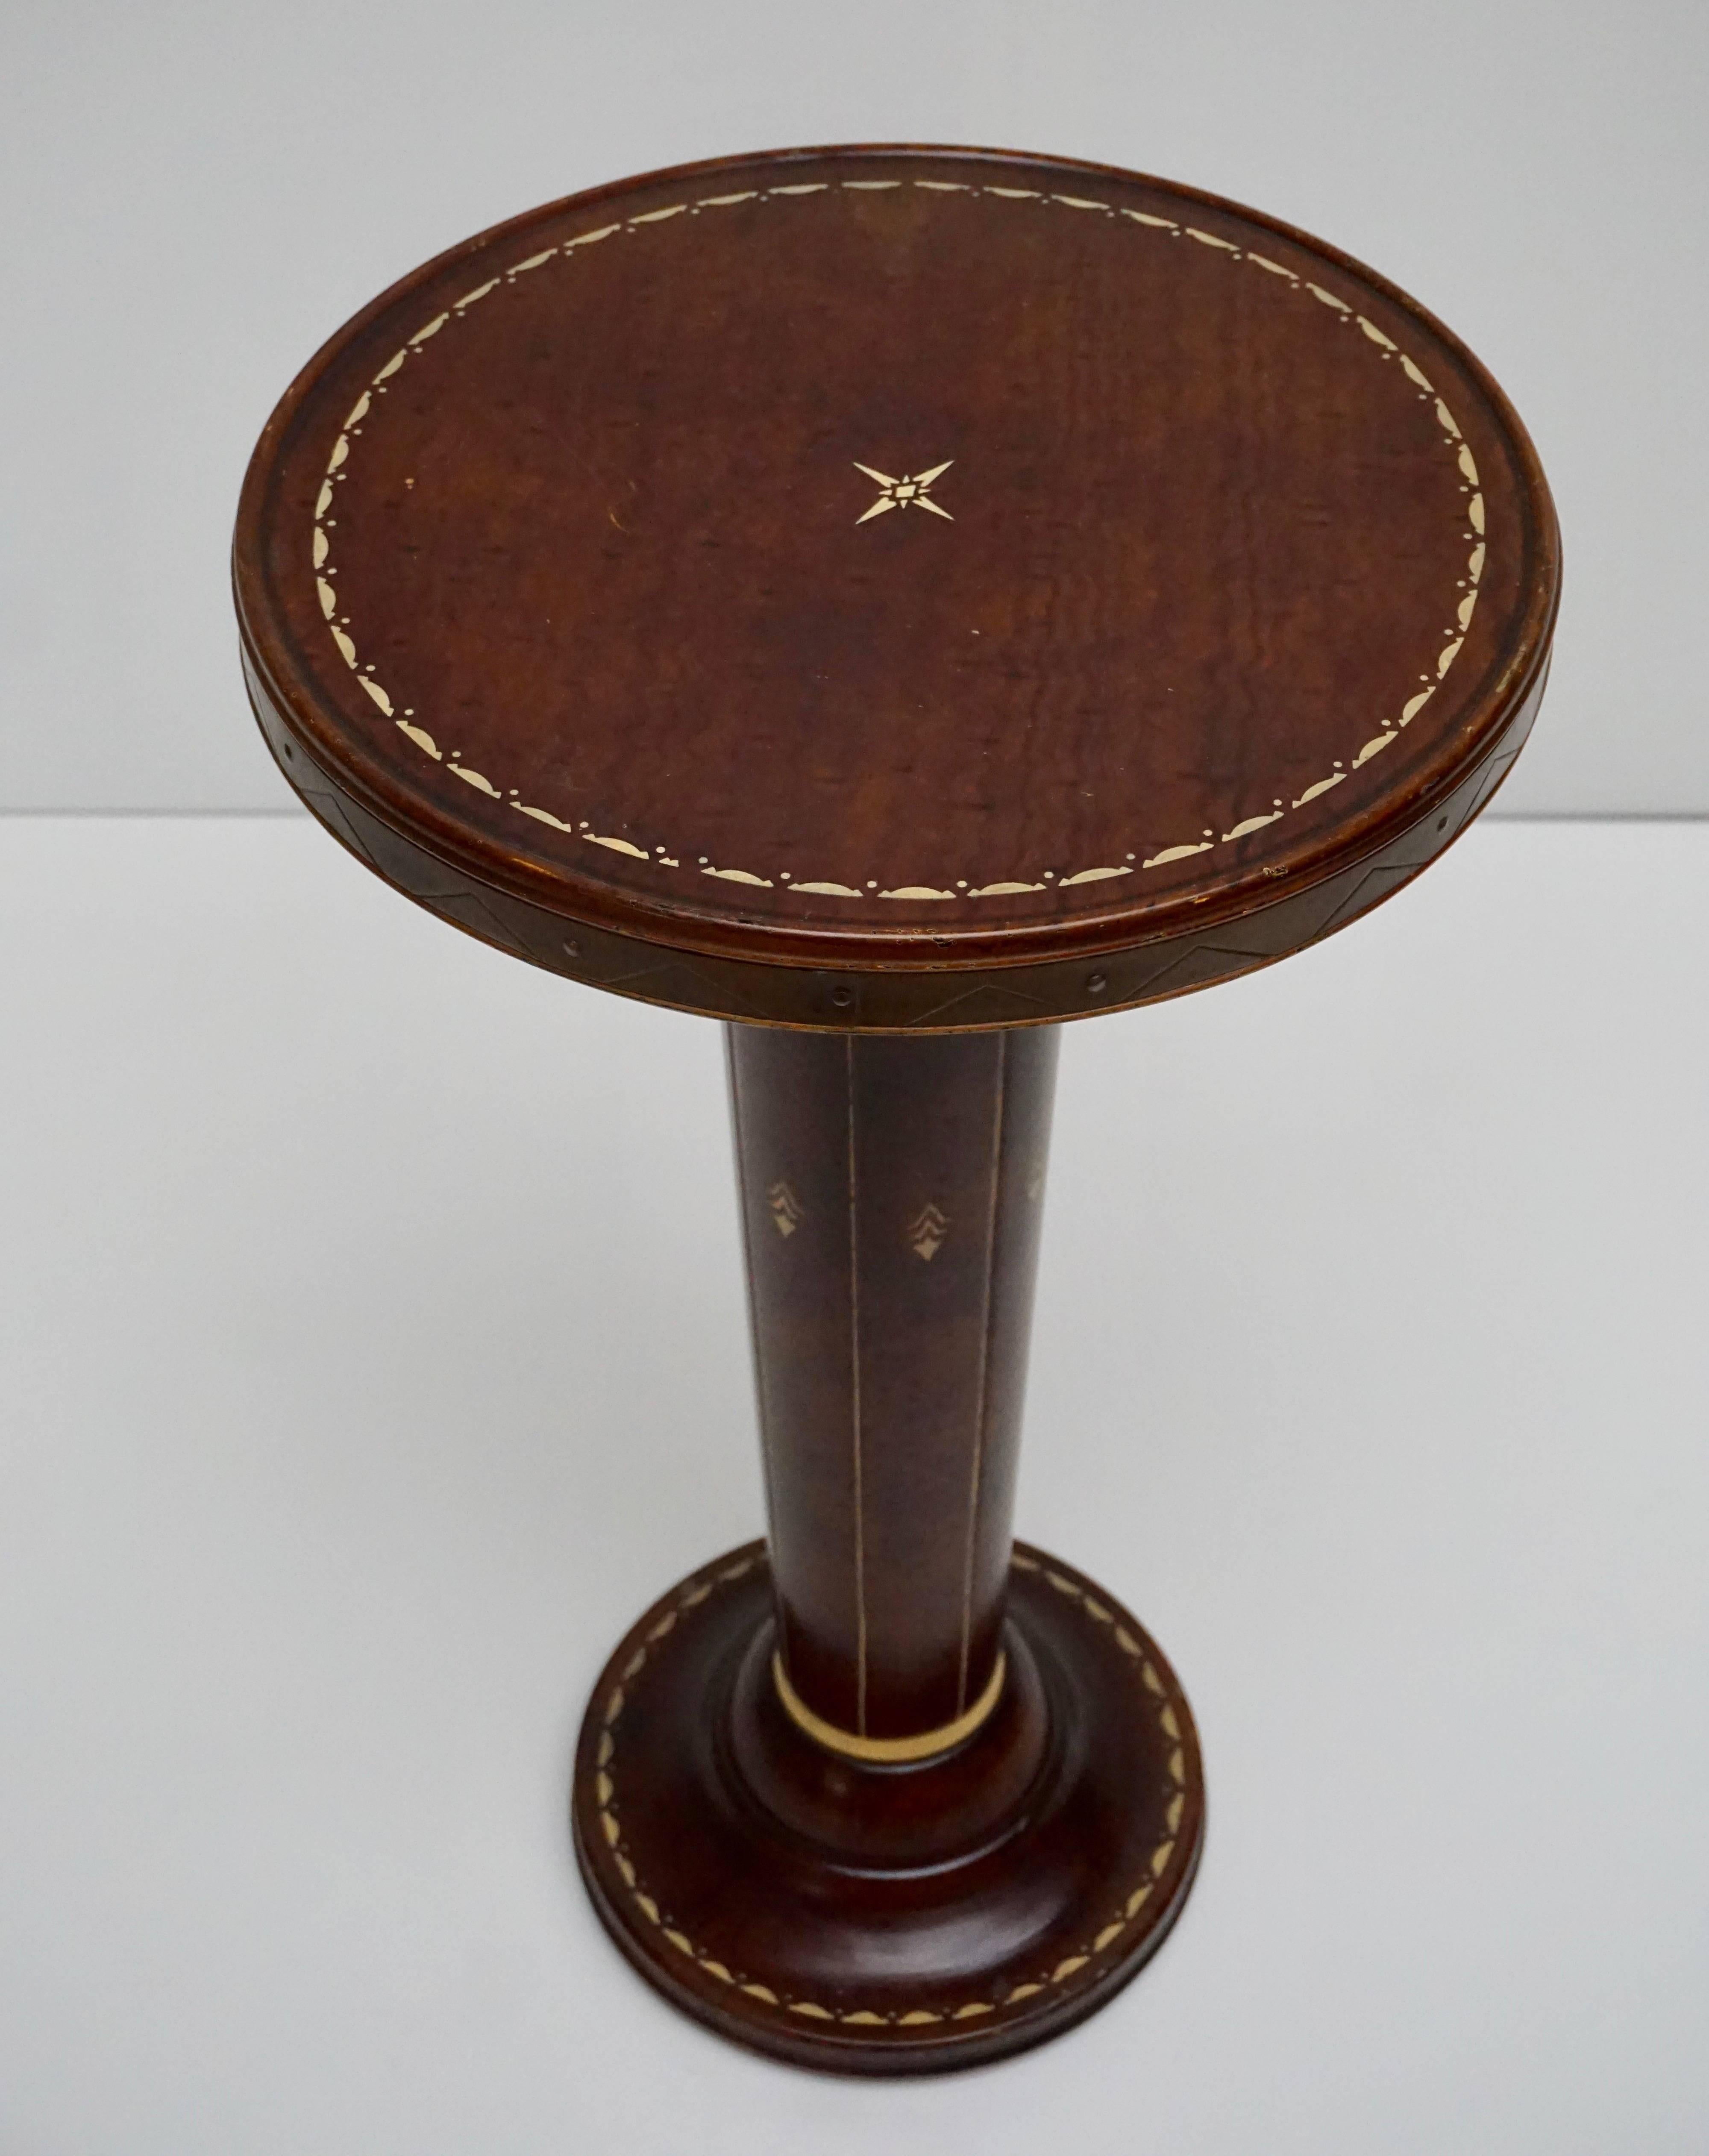 Art Deco side table.
Measures: Diameter 38 cm.
Height 67 cm.